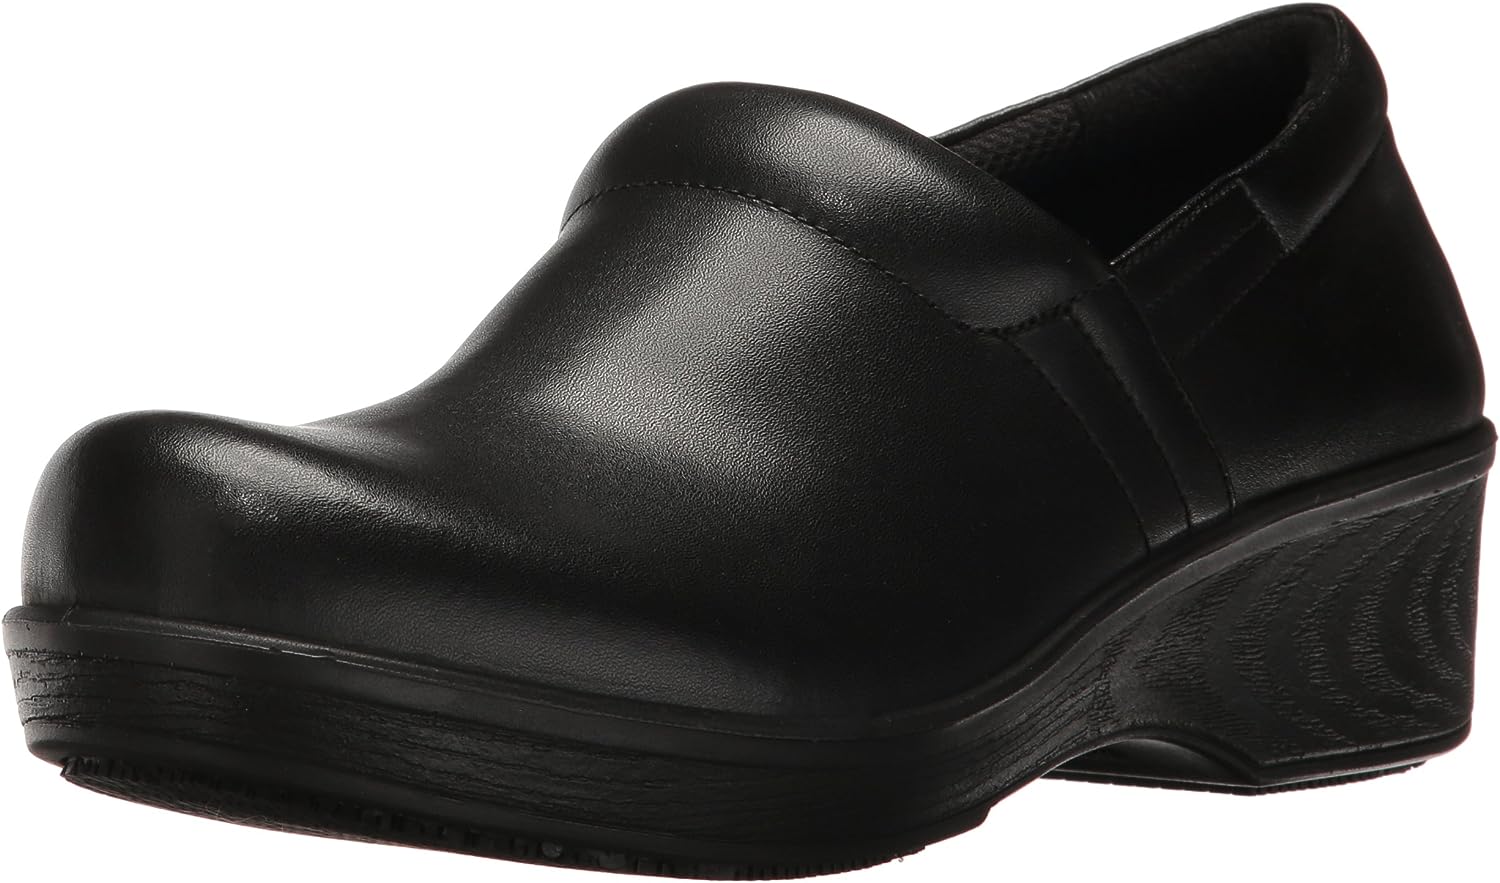 best slip resistant shoes for waitresses